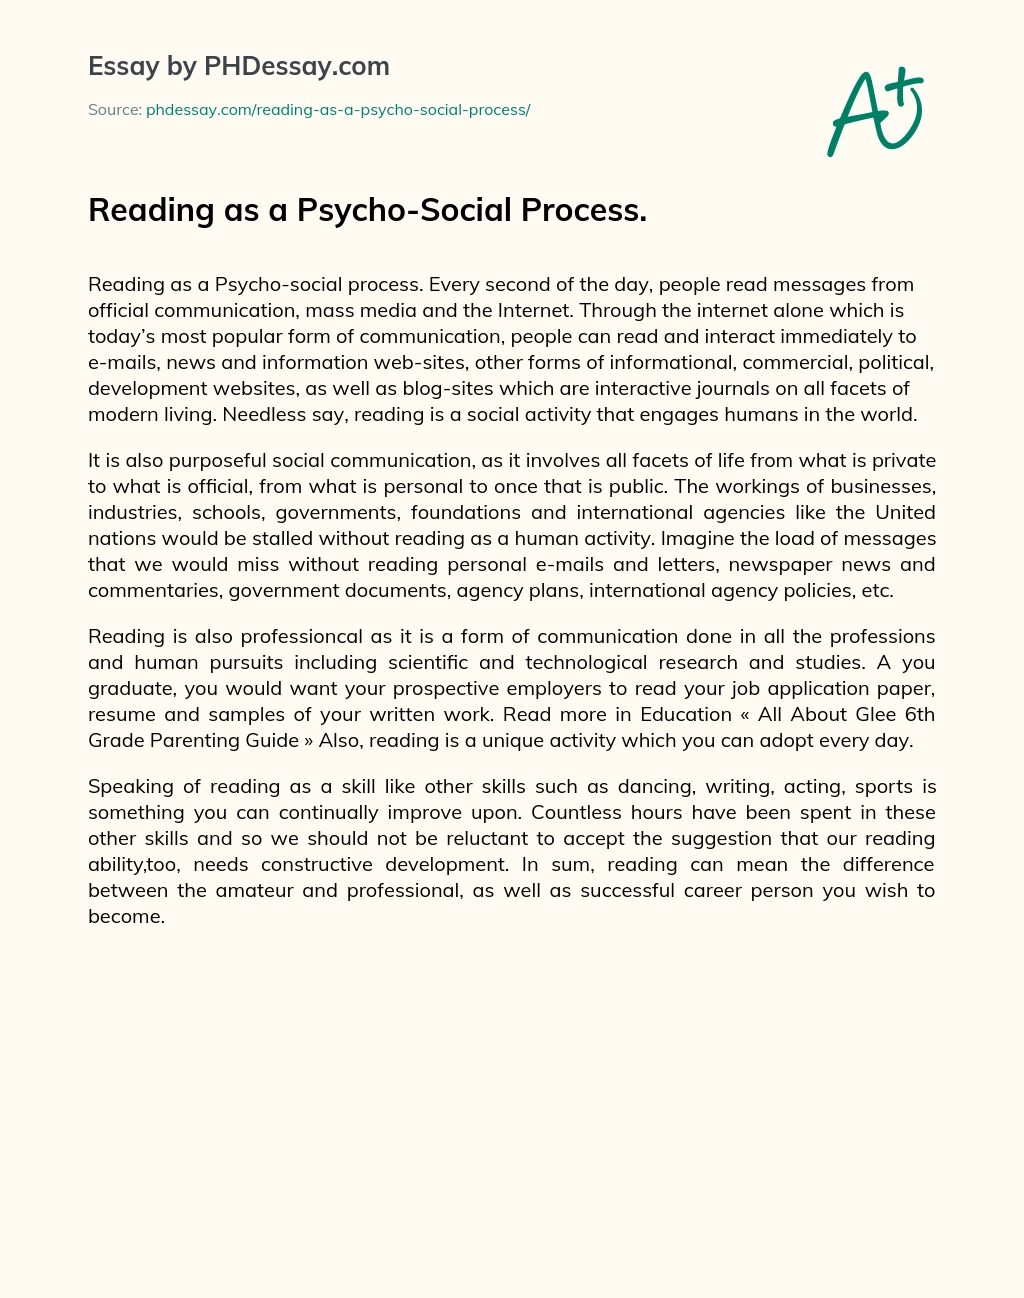 Reading as a Psycho-Social Process. essay